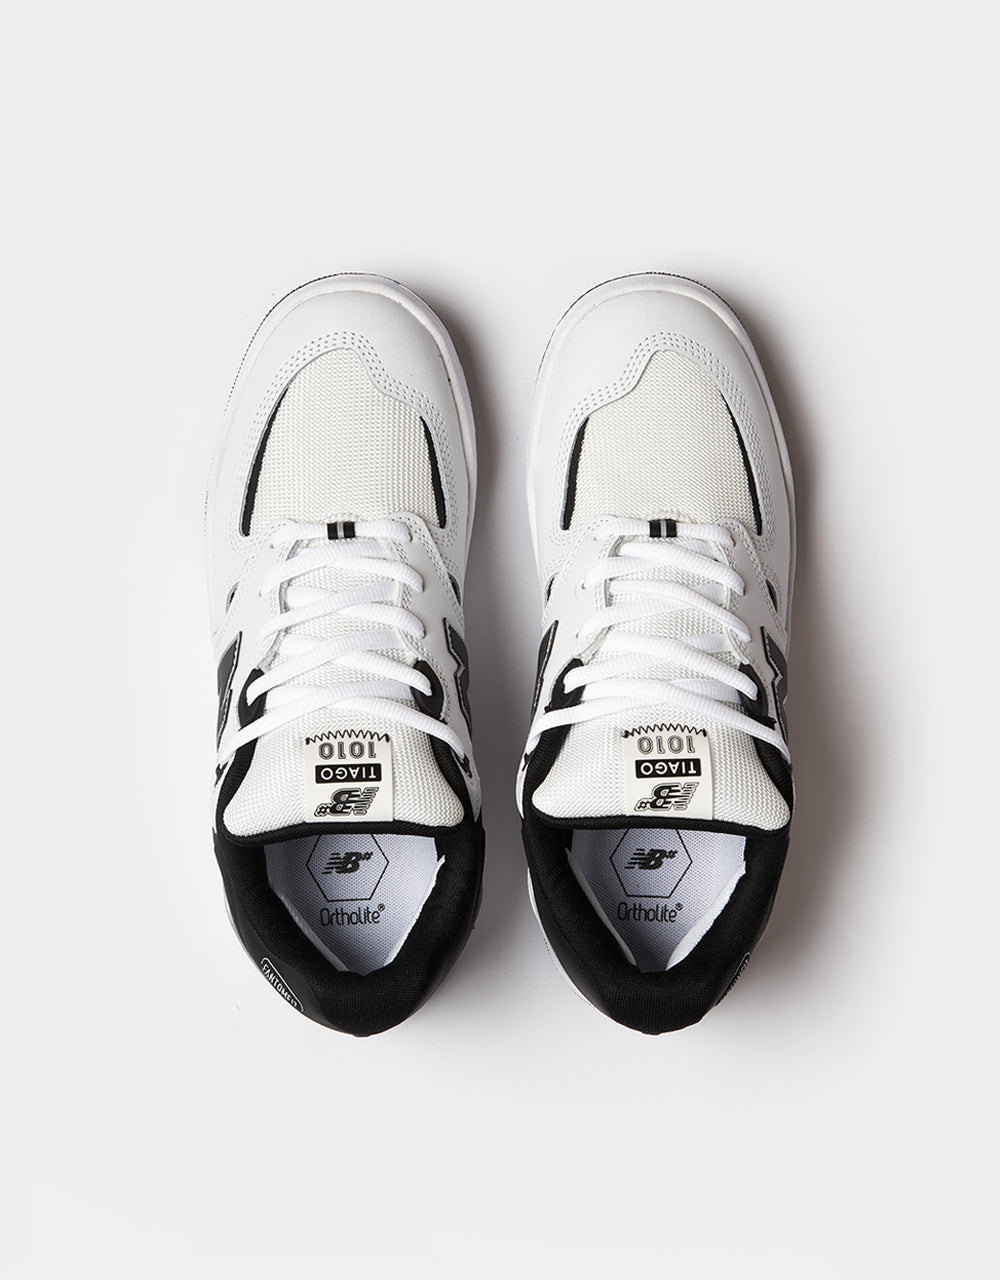 New Balance Numeric Tiago Lemos 1010 Skate Shoes - White/Black